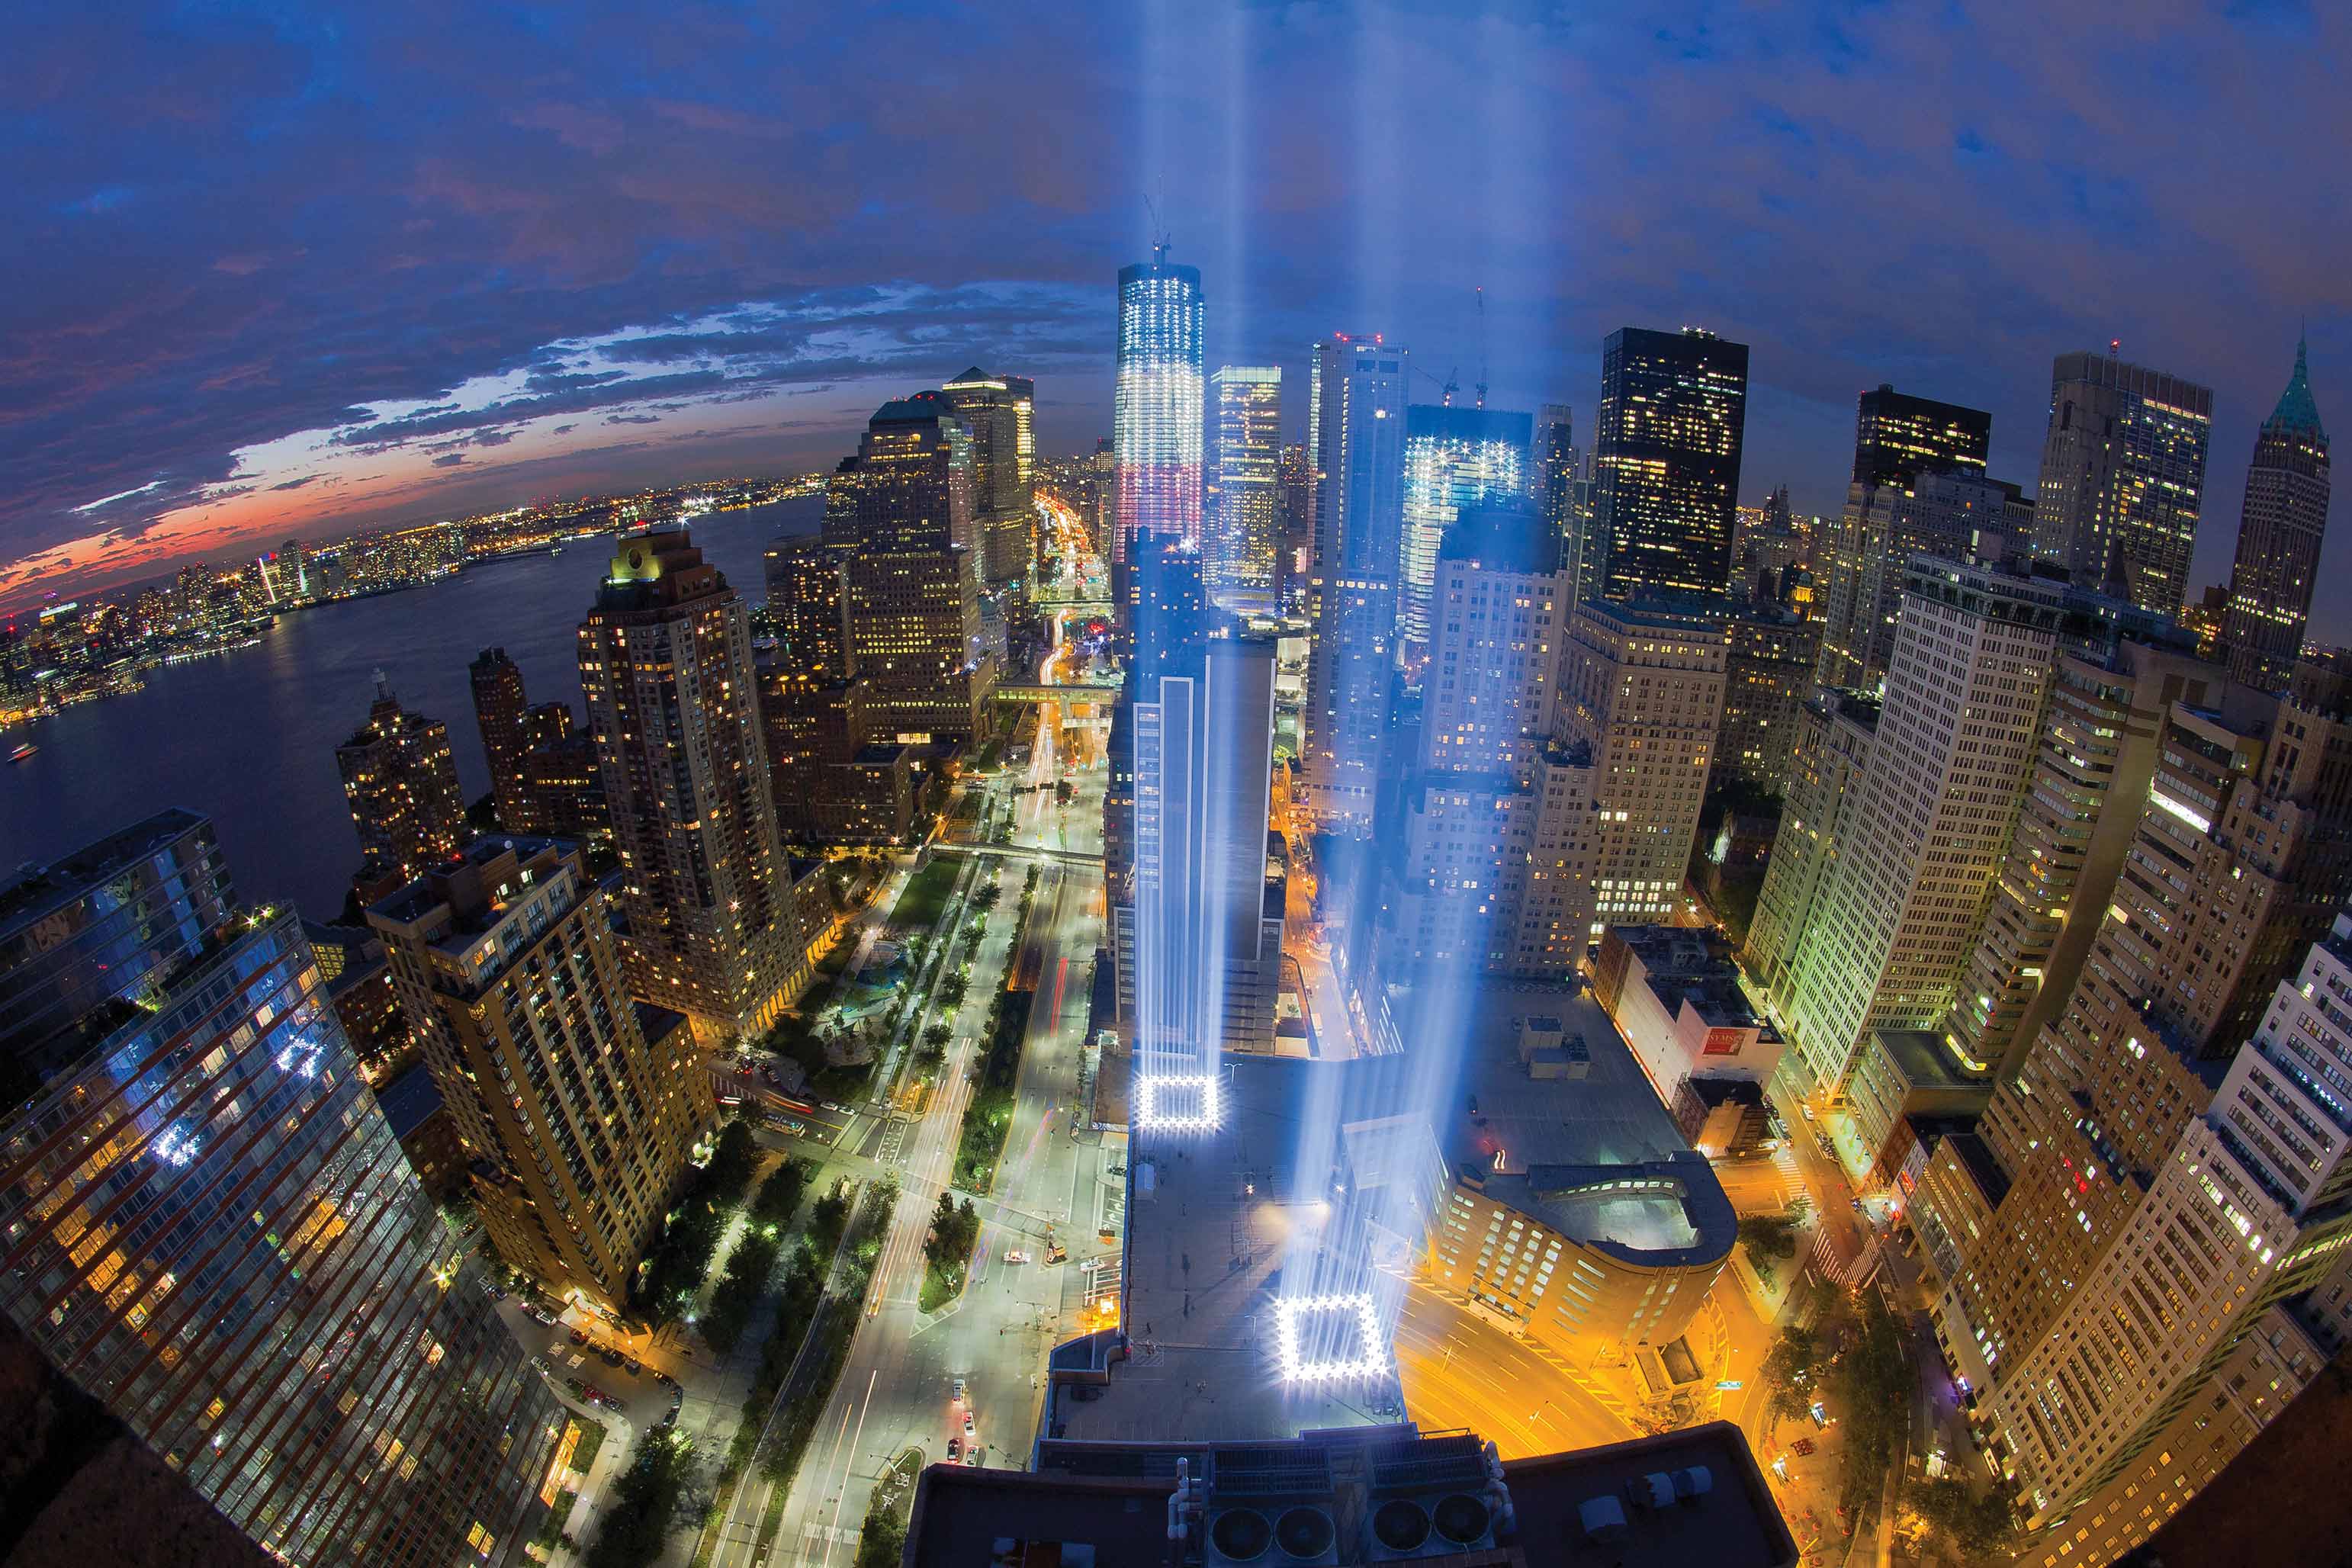 September 11 wallpaper Gallery